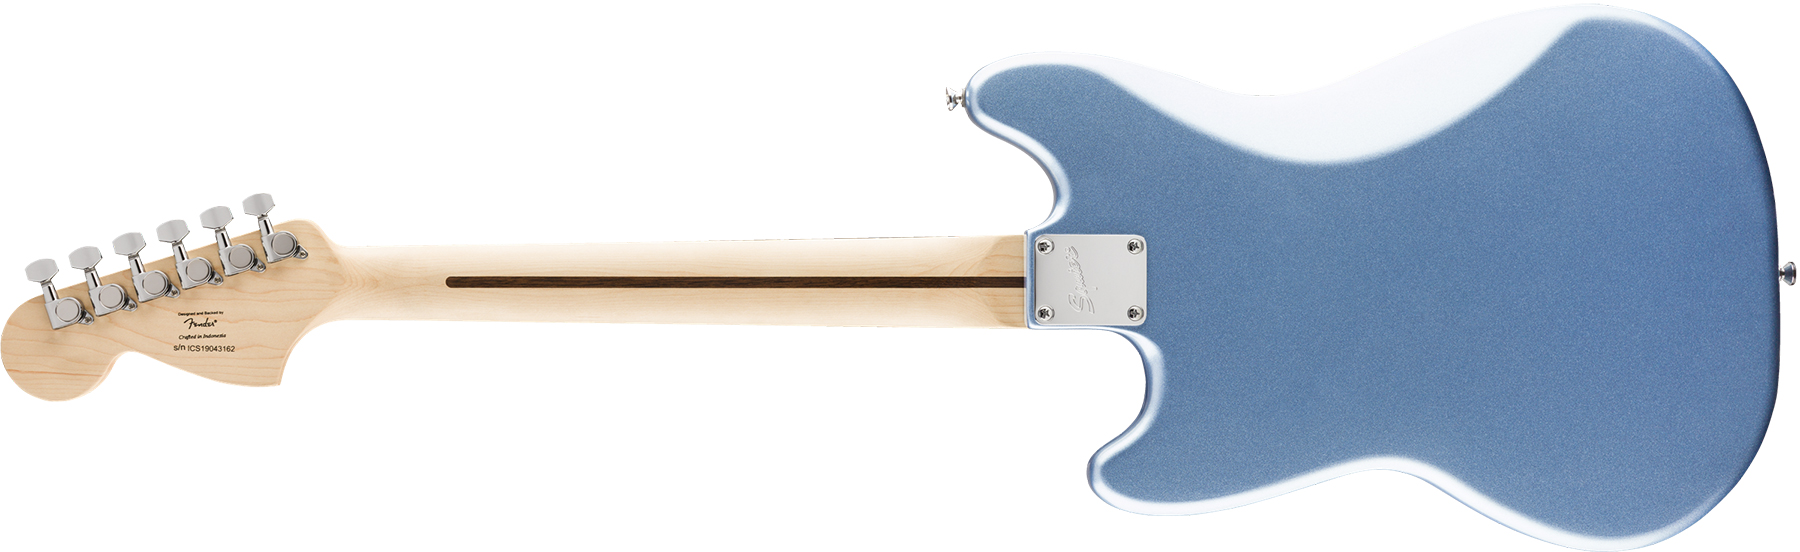 Squier Mustang Bullet Competition Hh Fsr Ht Lau - Lake Placid Blue - Guitarra electrica retro rock - Variation 1